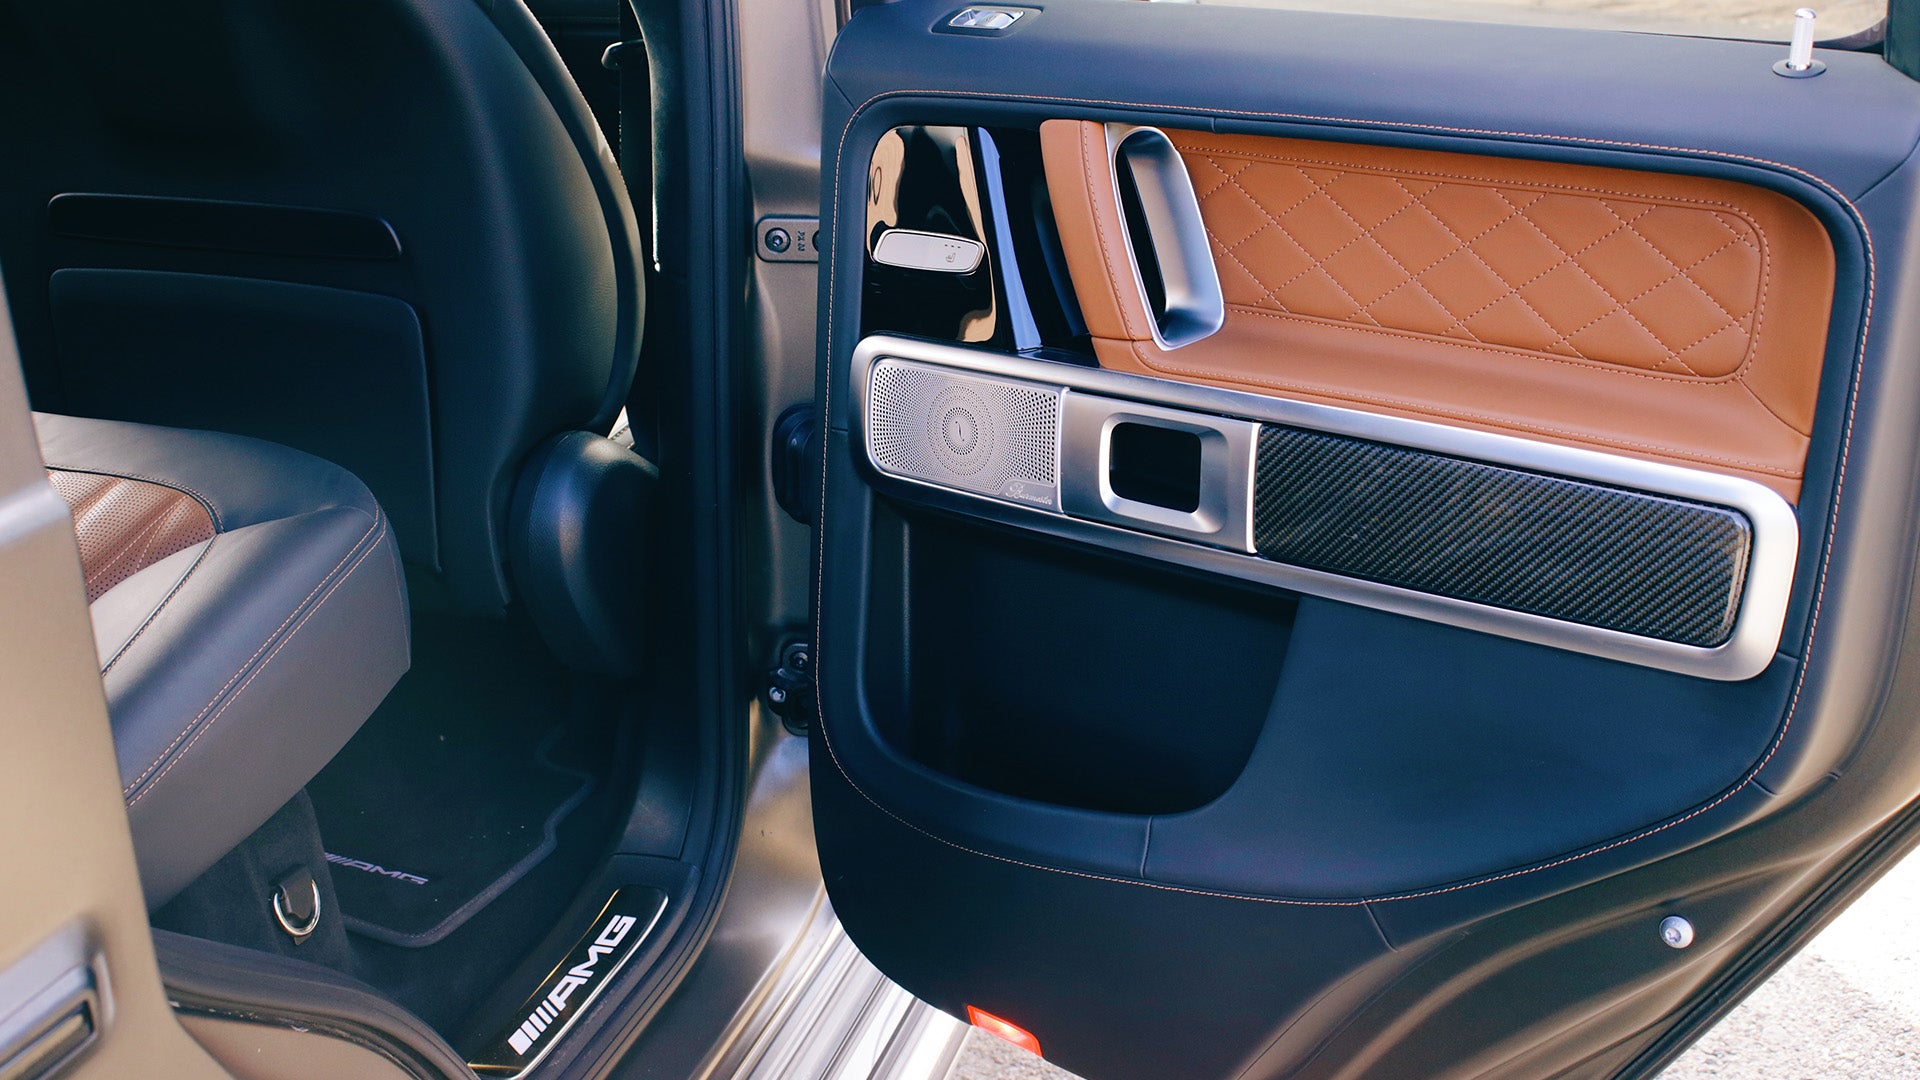 Mercedes-AMG G63 door card interior